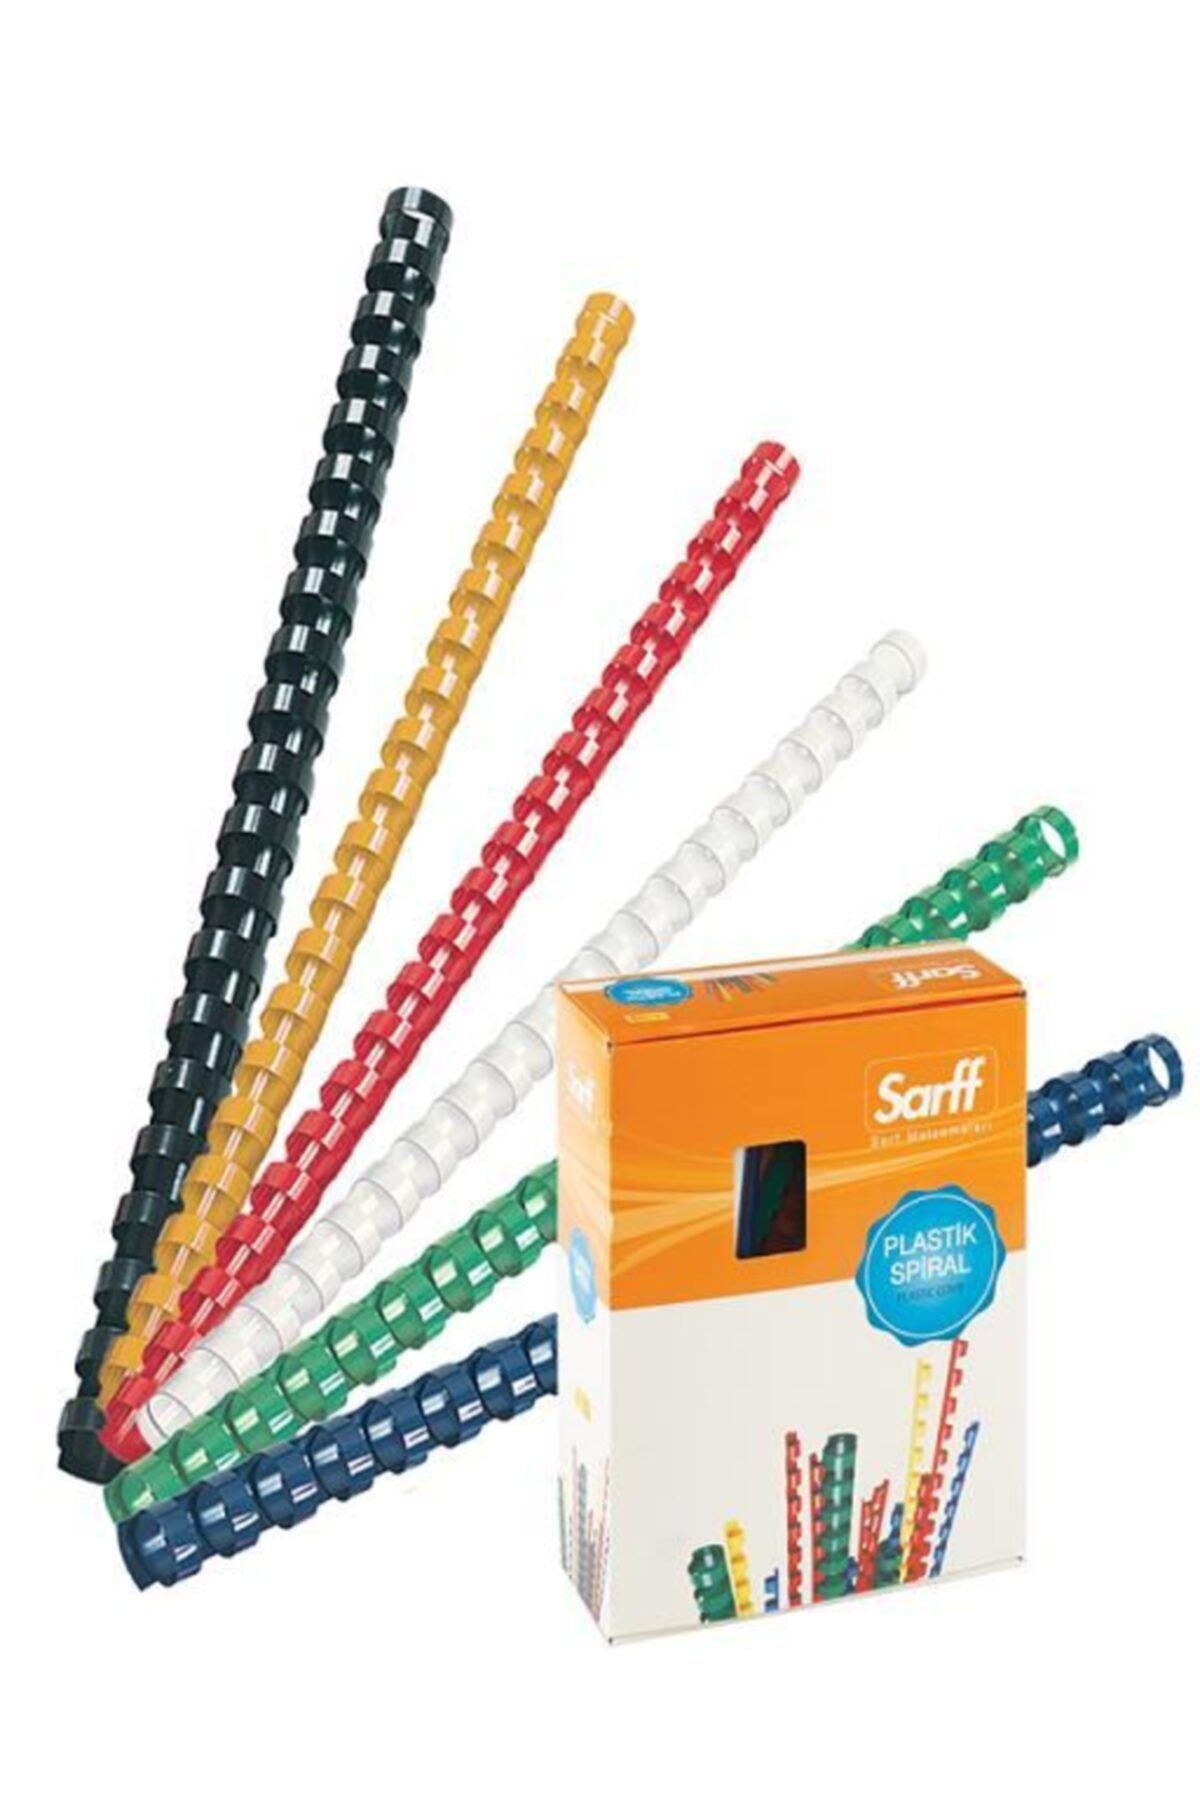 SARFF Plastik Spiral 18 Mm Beyaz 100 Lü (1 Paket 100 Adet)